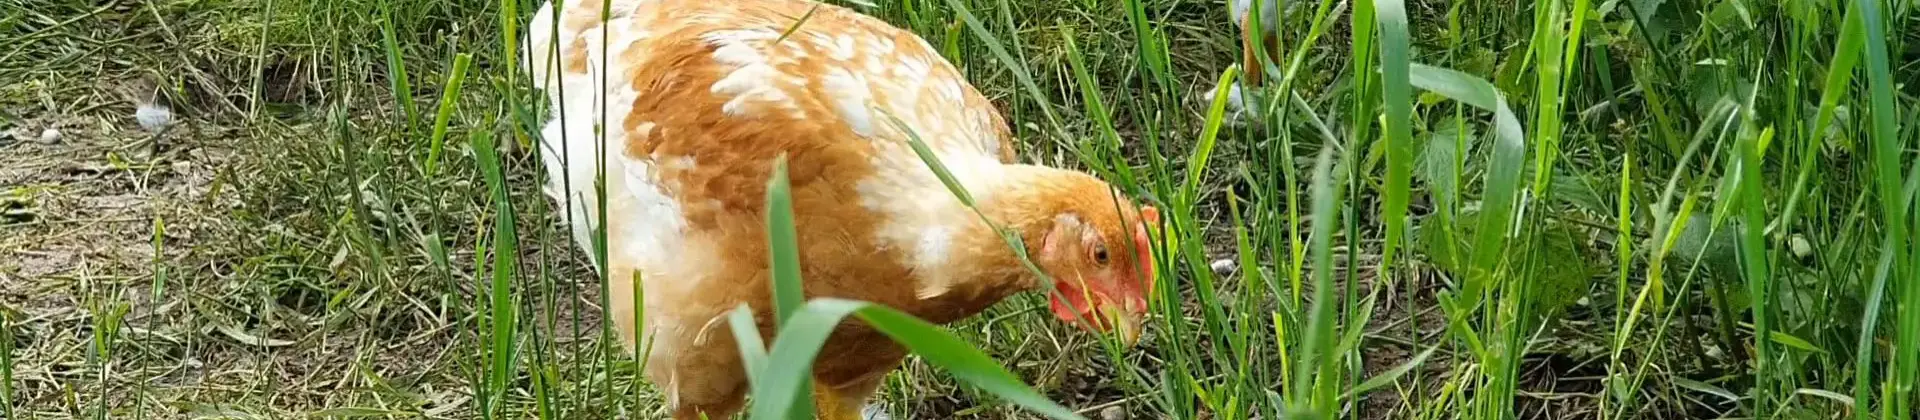 Huhn im Gras